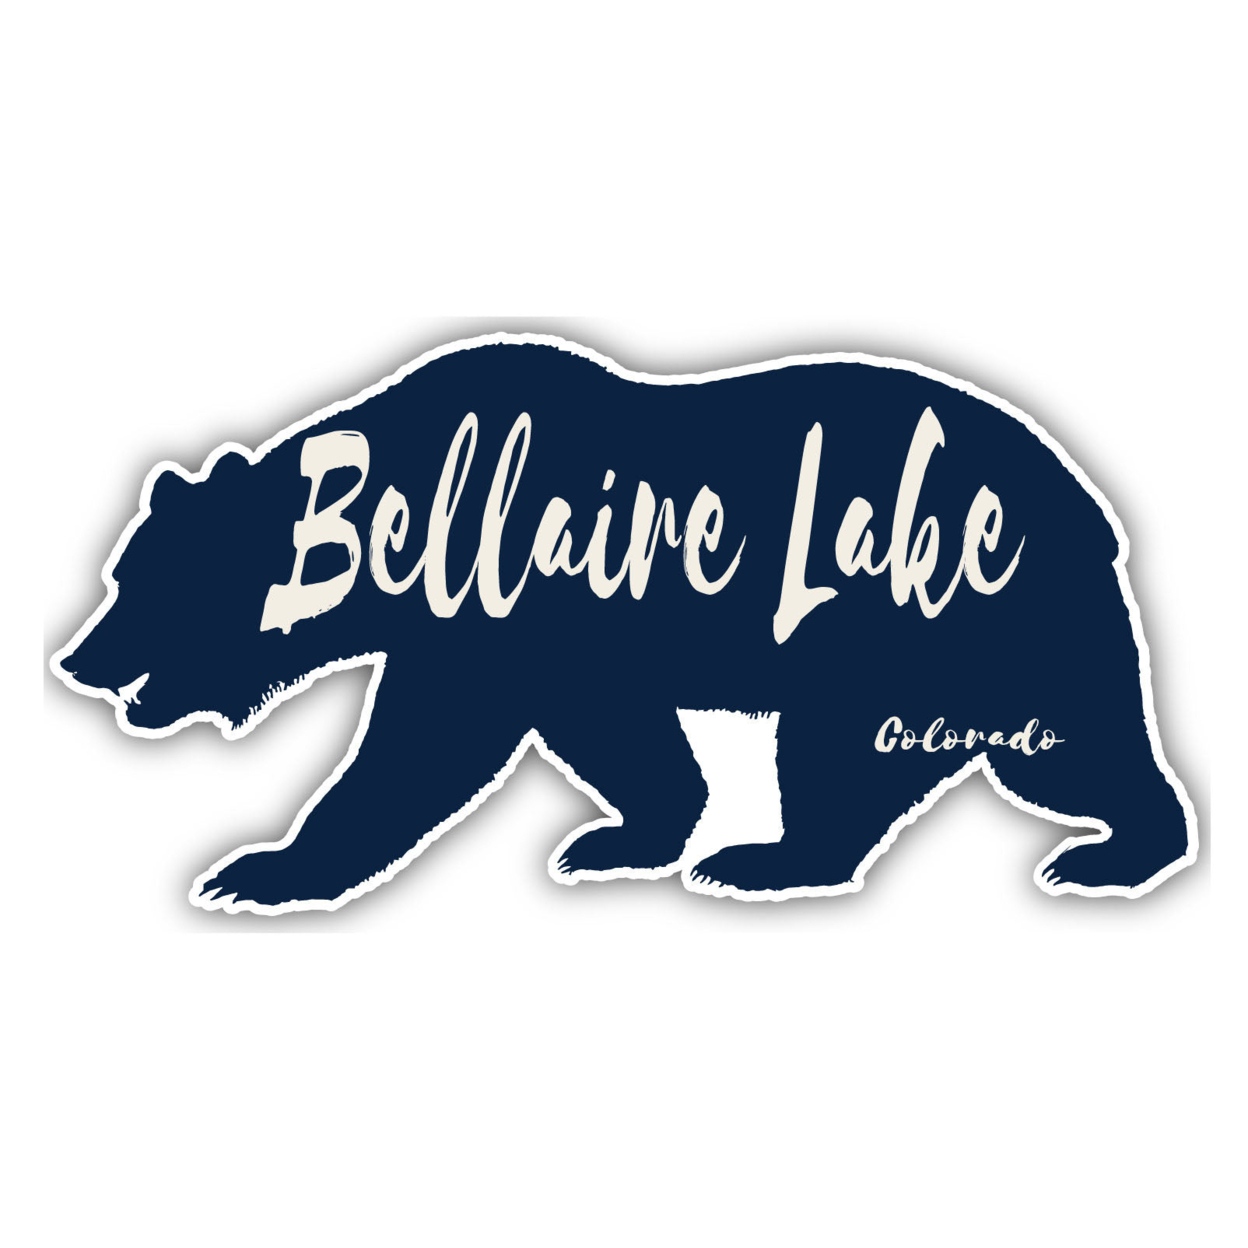 Bellaire Lake Colorado Souvenir Decorative Stickers (Choose Theme And Size) - Single Unit, 10-Inch, Bear